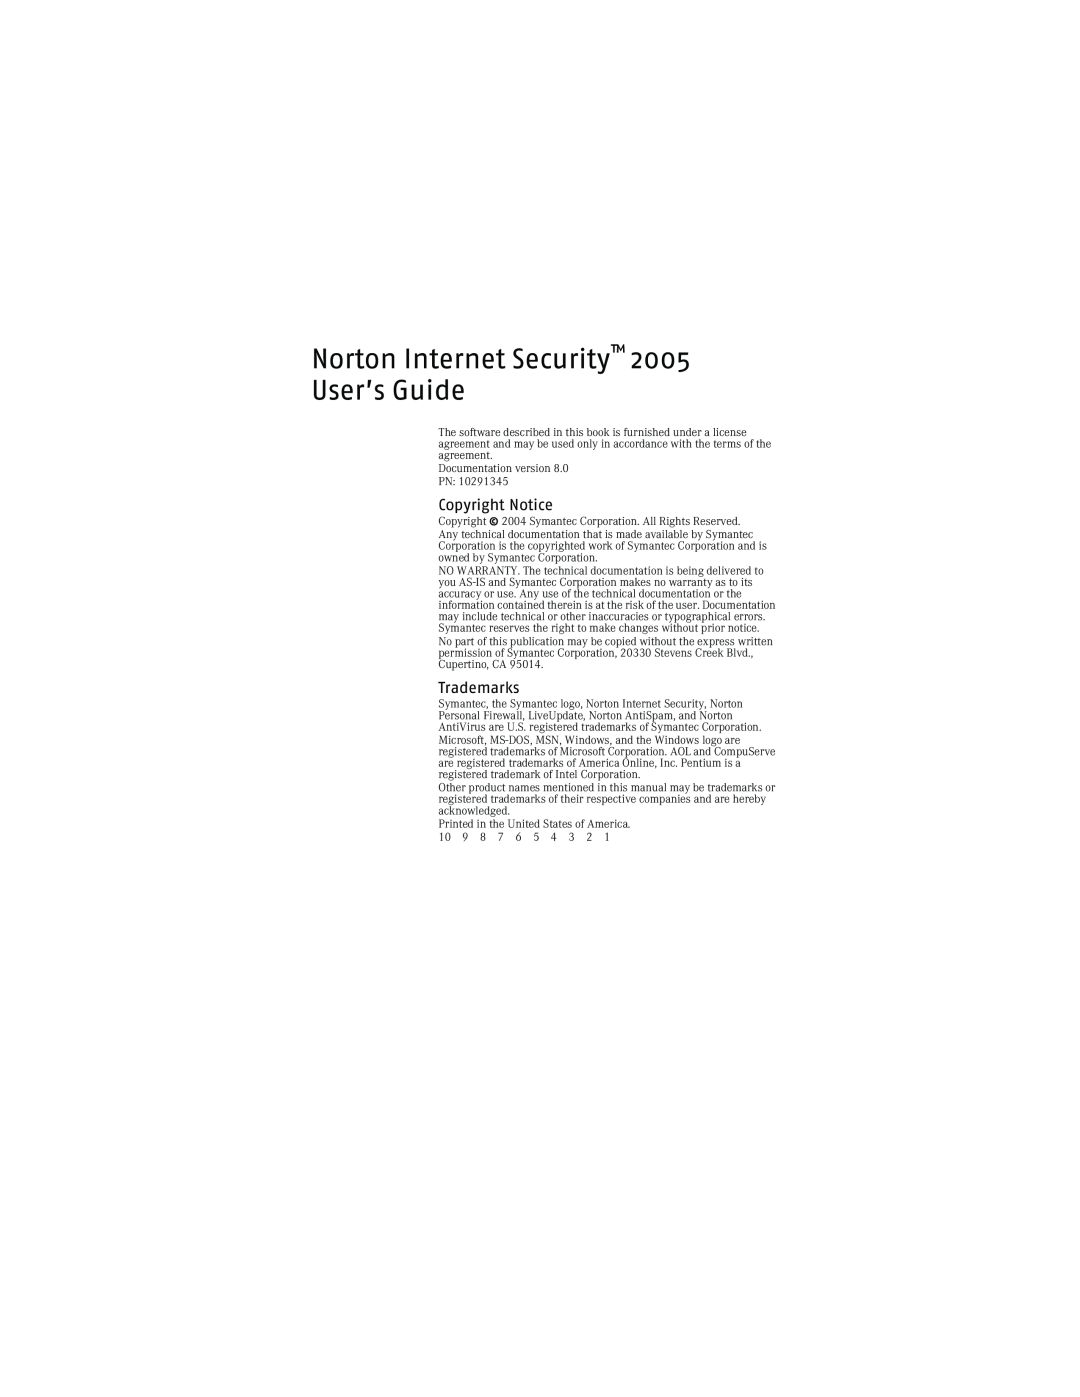 Symantec NIS2005 manual Copyright Notice, Trademarks, Norton Internet Security 2005 User’s Guide 